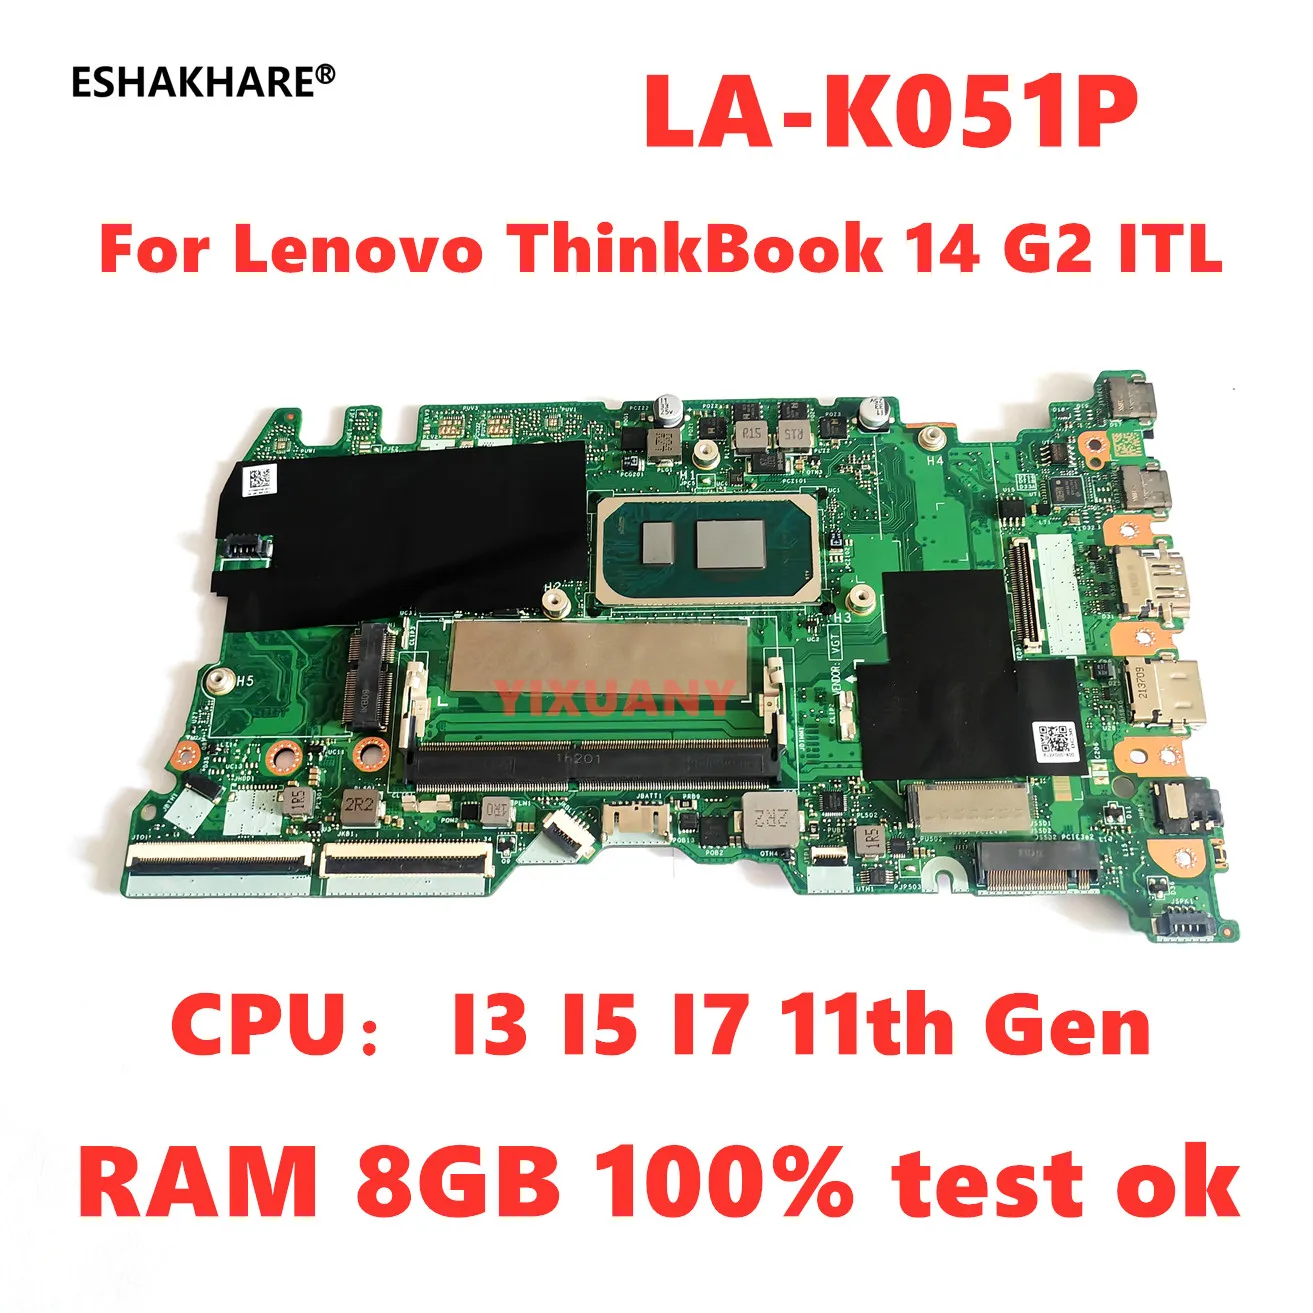 

For Lenovo ThinkBook 14 G2 15 52 ITL Notebook Mainboard Laptop 5B21A24600 LA-K051P i3 i5 i7 11th Gen new Motherboard 100% test